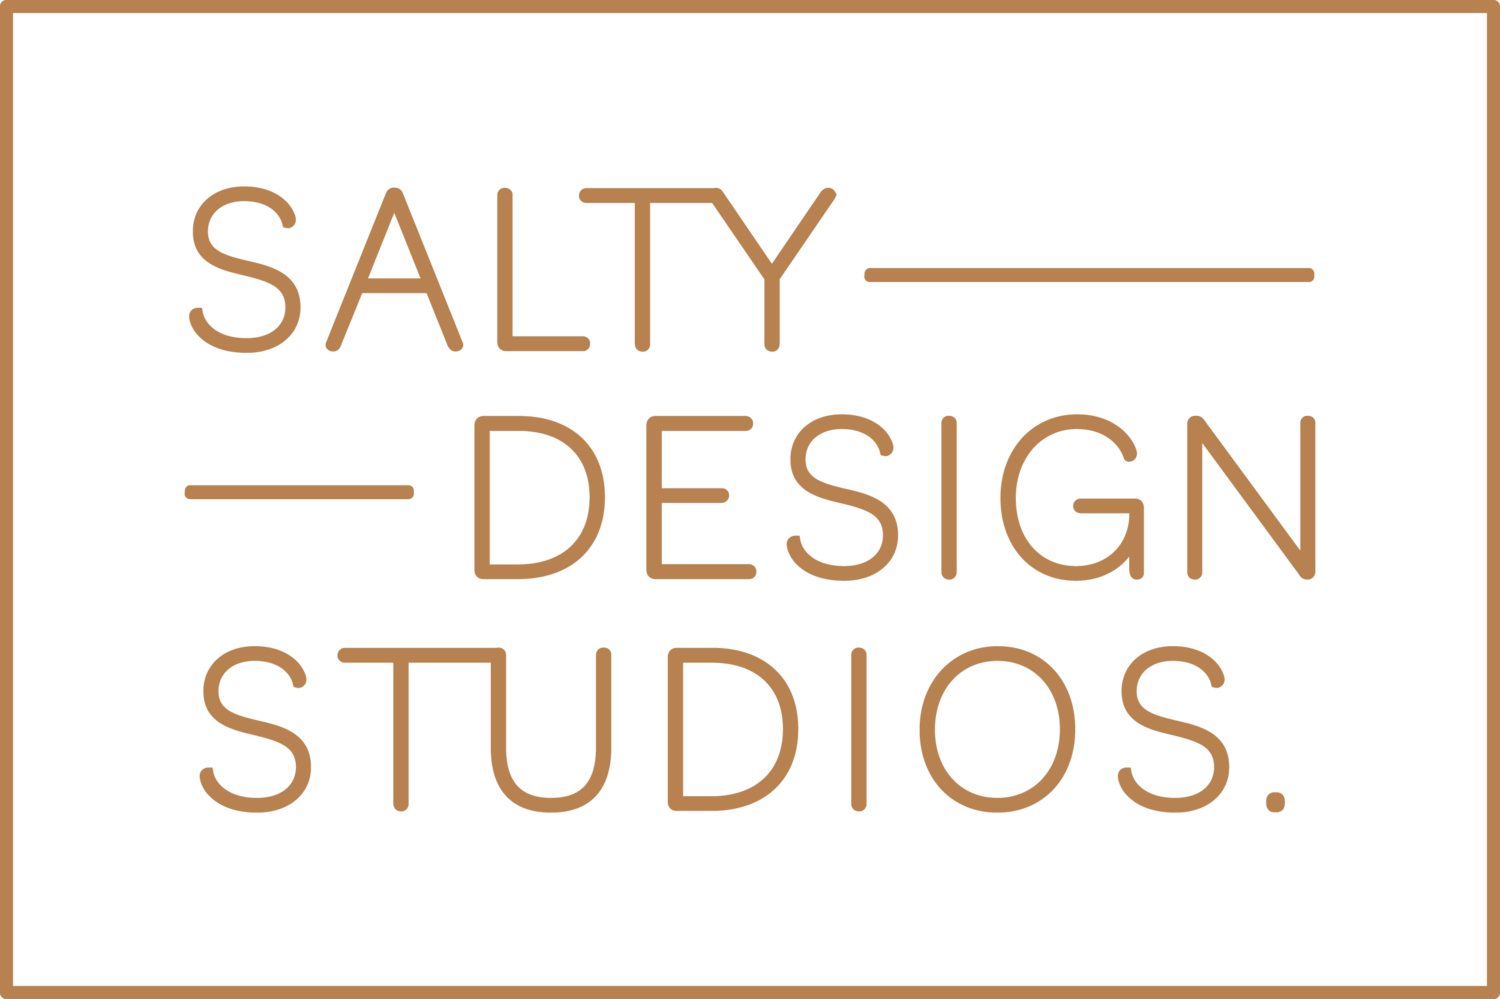 Salty Design Studios.